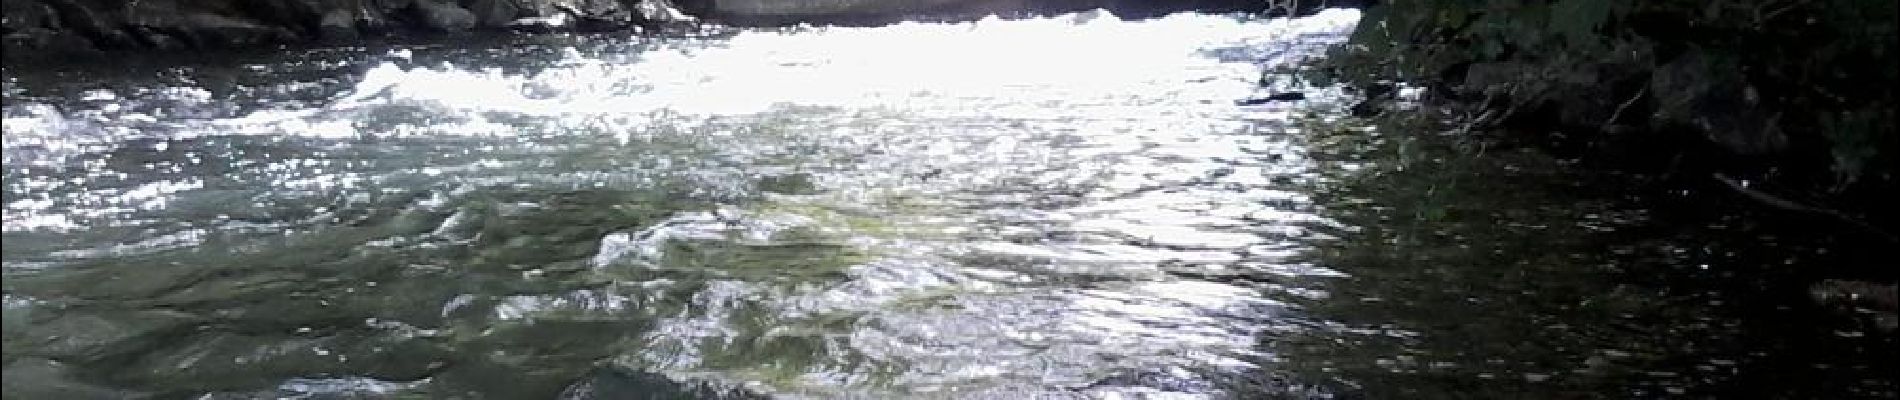 Trail Canoe - kayak Rhinau - Canoé-brunnwasser en canoé - Photo